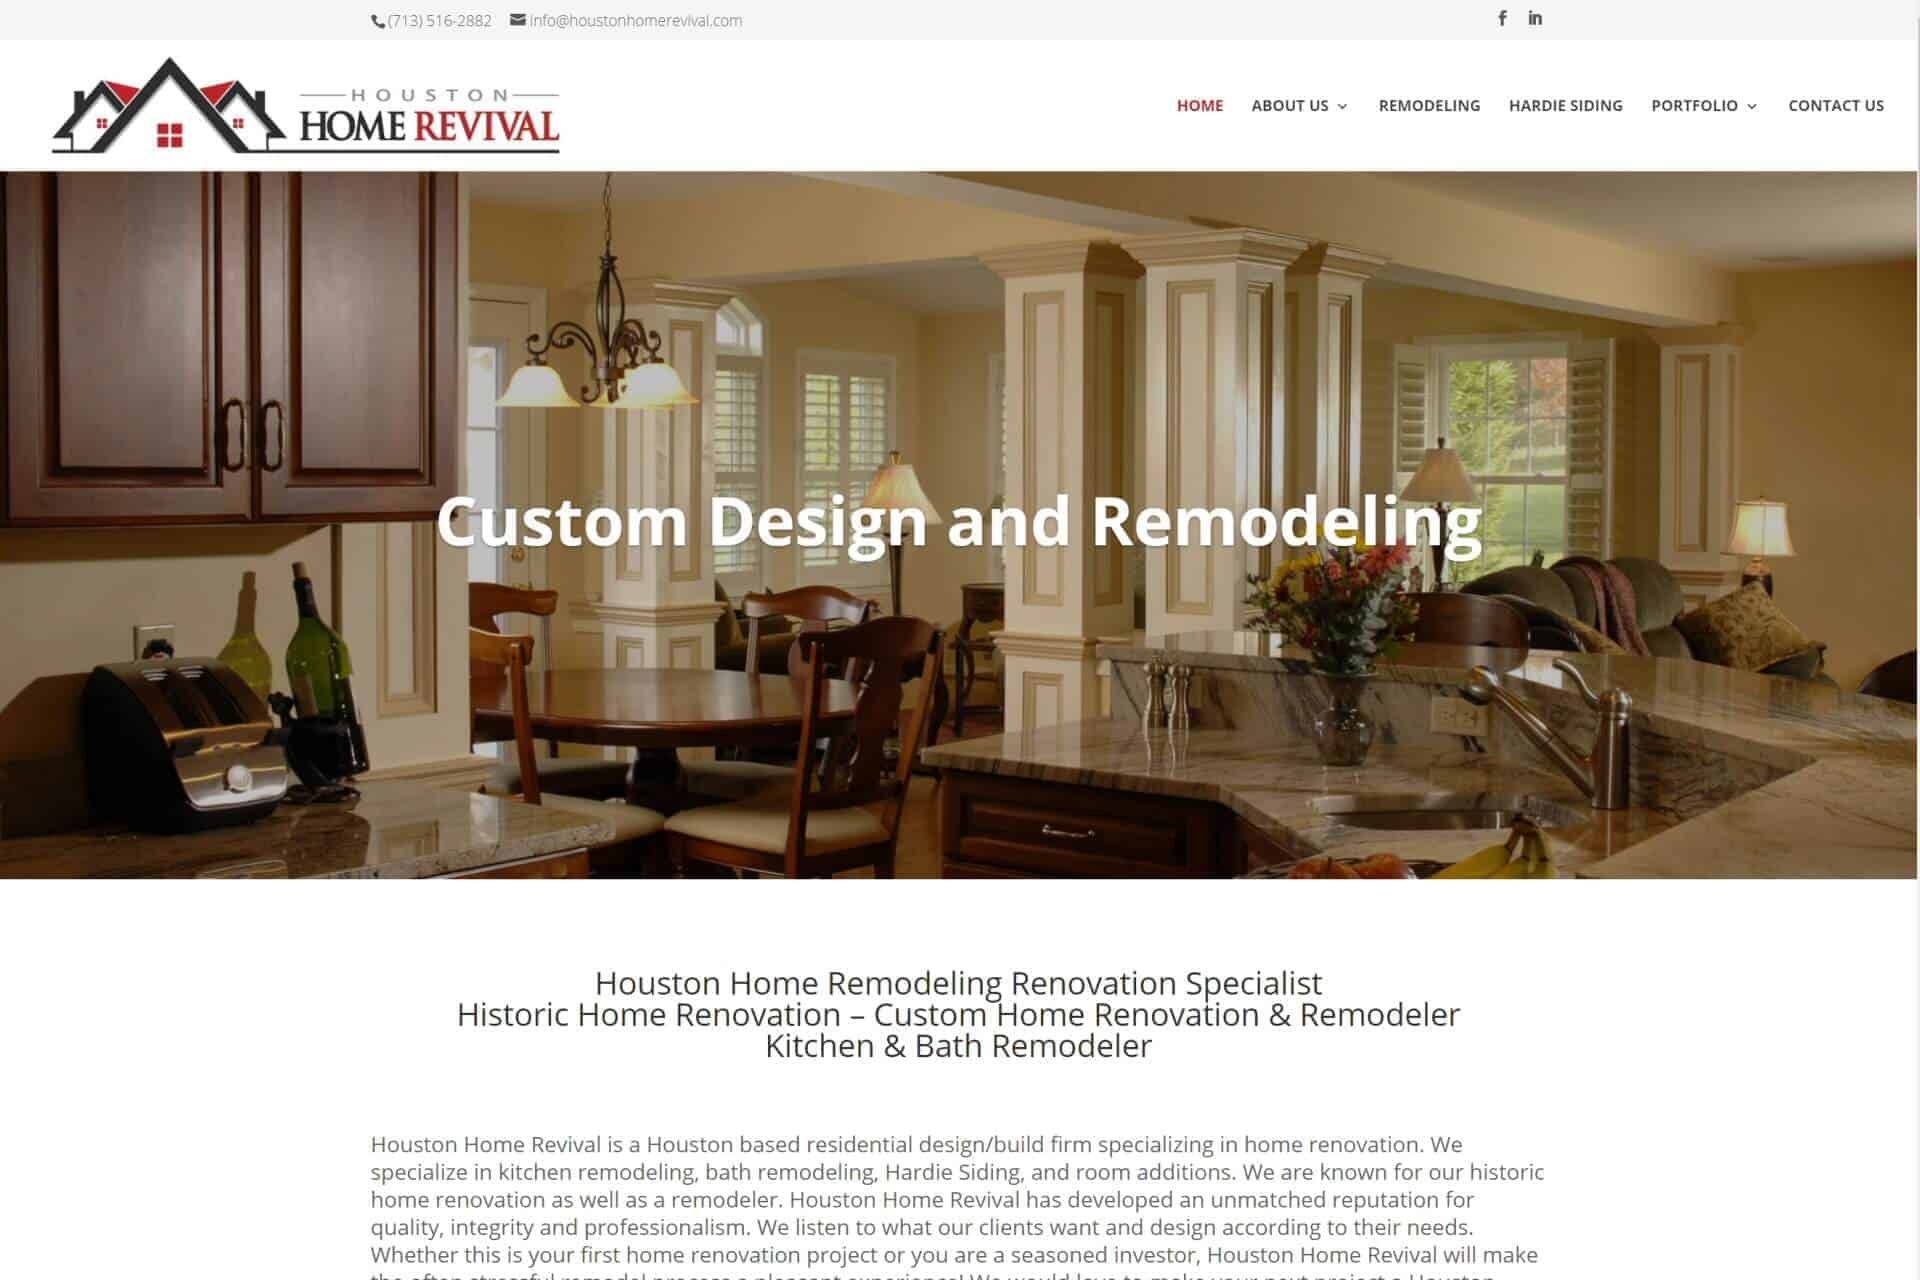 Houston Home Revival Home Remodeling & Renovation - Website Links for Marquise Pools #1 Best Pool Builder